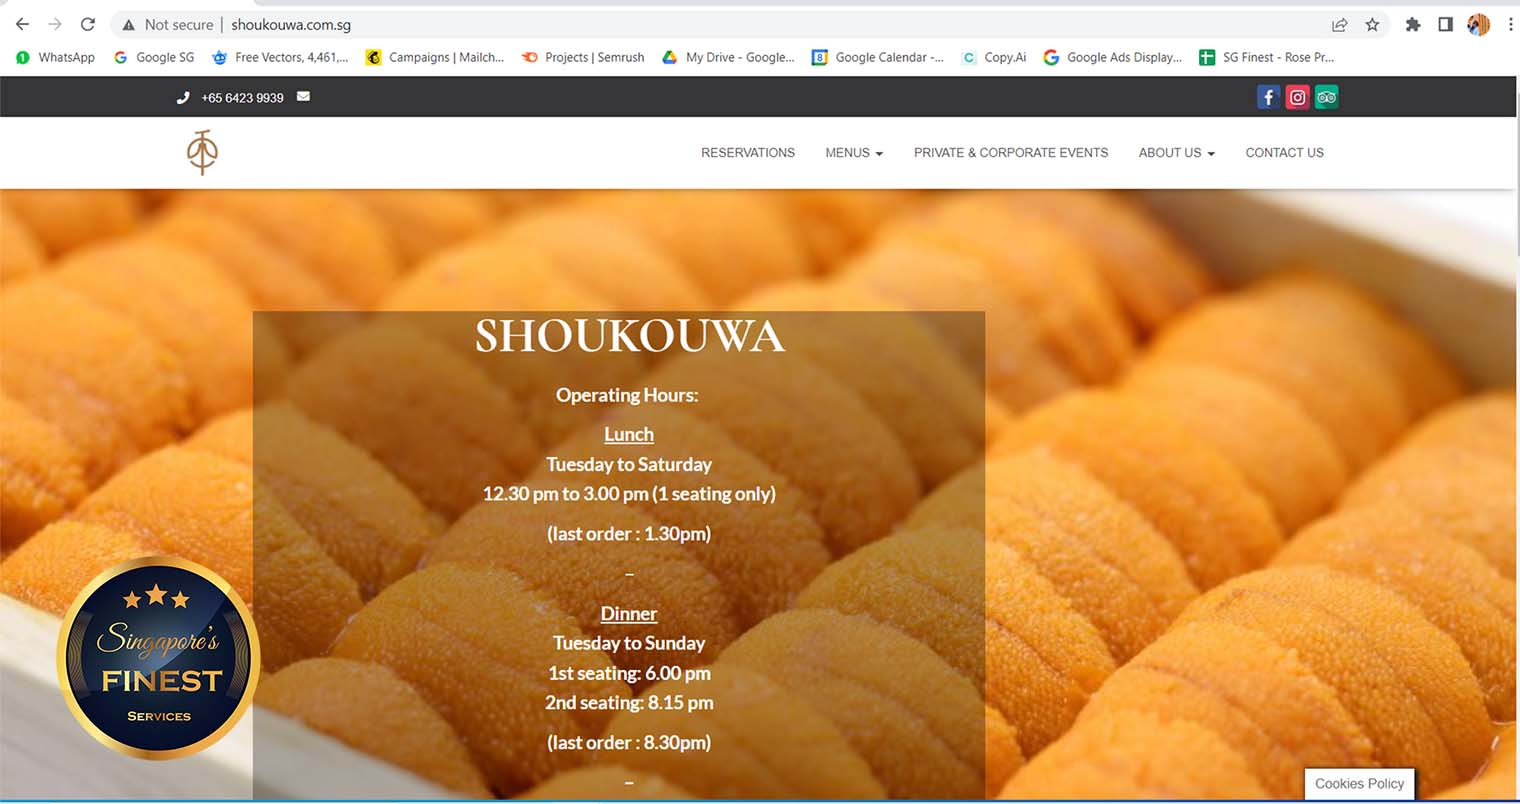 Shoukouwa - Japanese Restaurant in Singapore